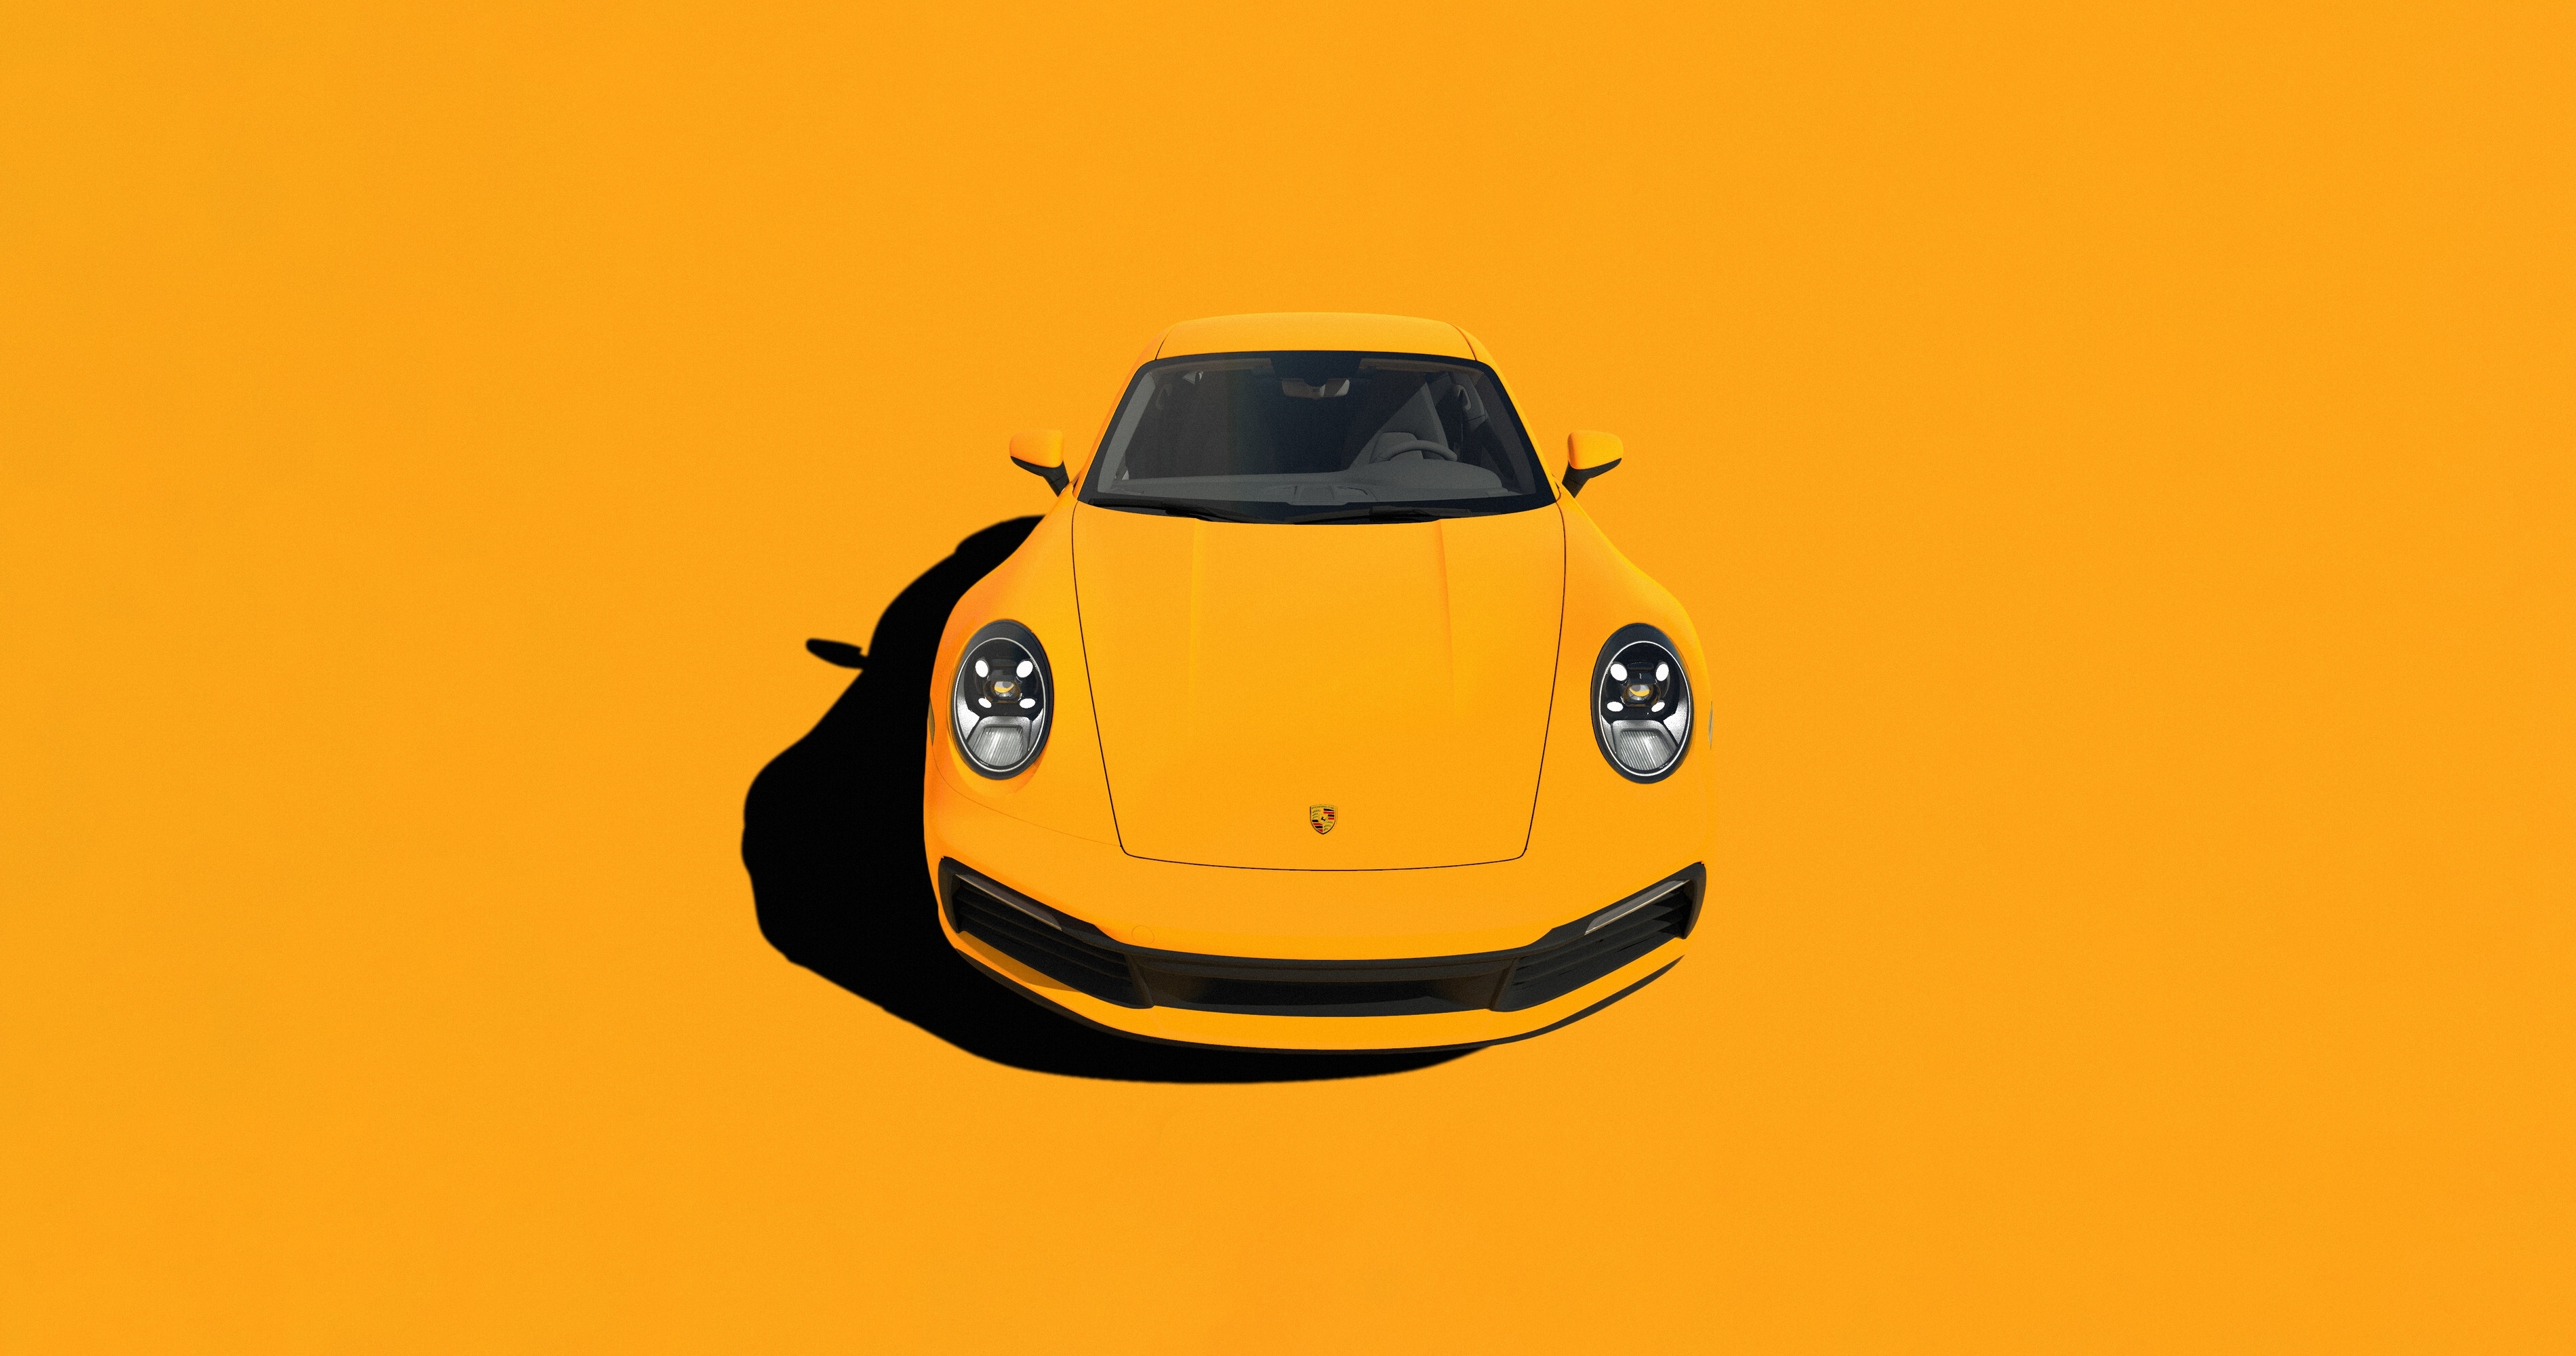 Porsche 911 Minimal Wallpaper, HD Minimalist 4K Wallpapers, Images, Photos  and Background - Wallpapers Den